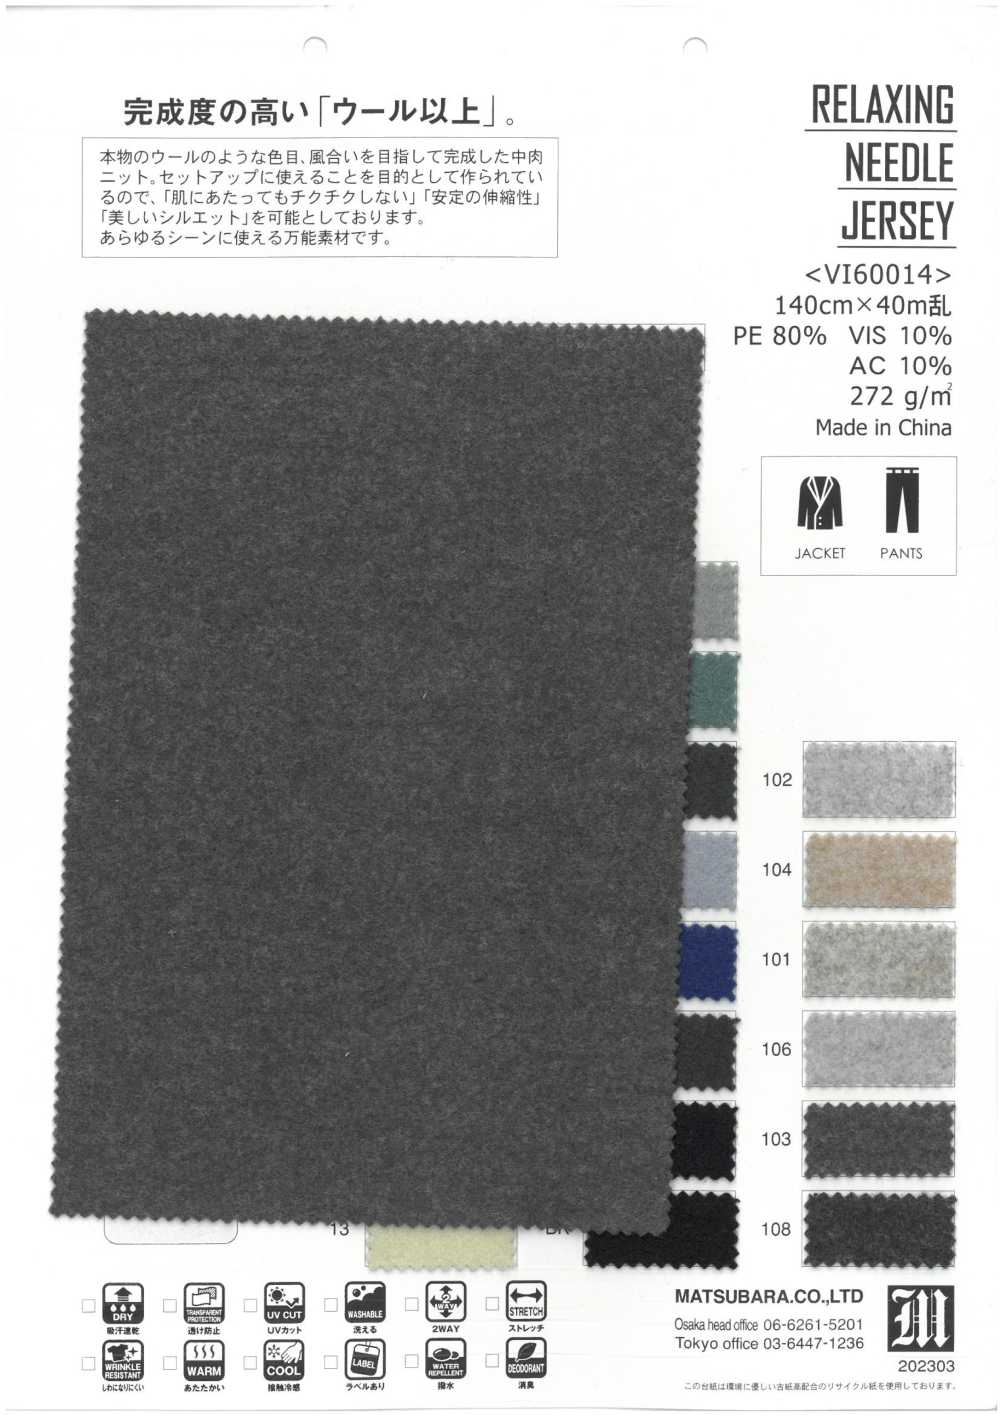 VI60014 ENTSPANNENDES NADELJERSEY[Textilgewebe] Matsubara